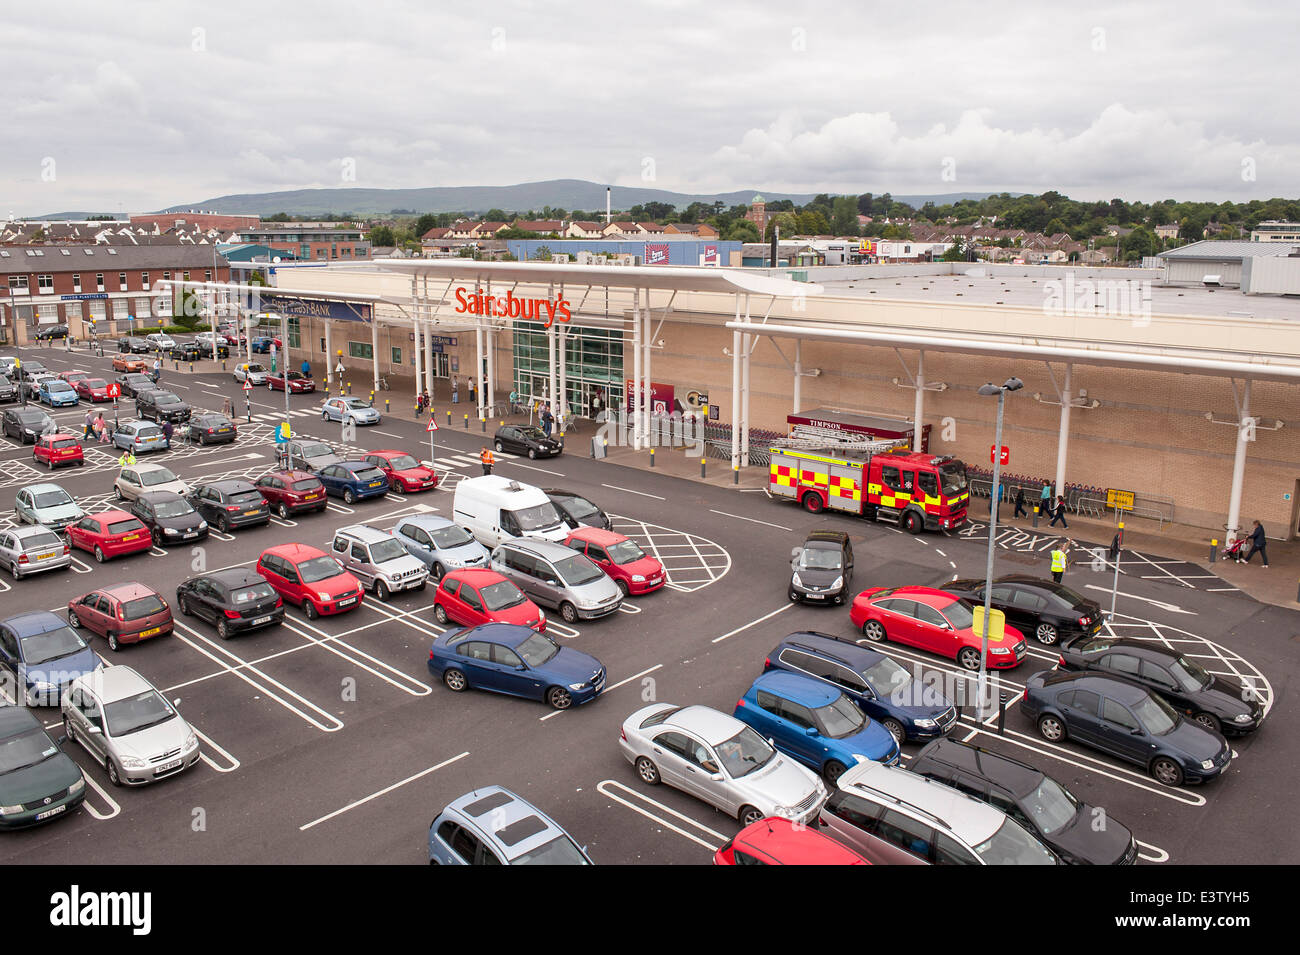 Sainsbury car park hi-res stock photography and images - Alamy